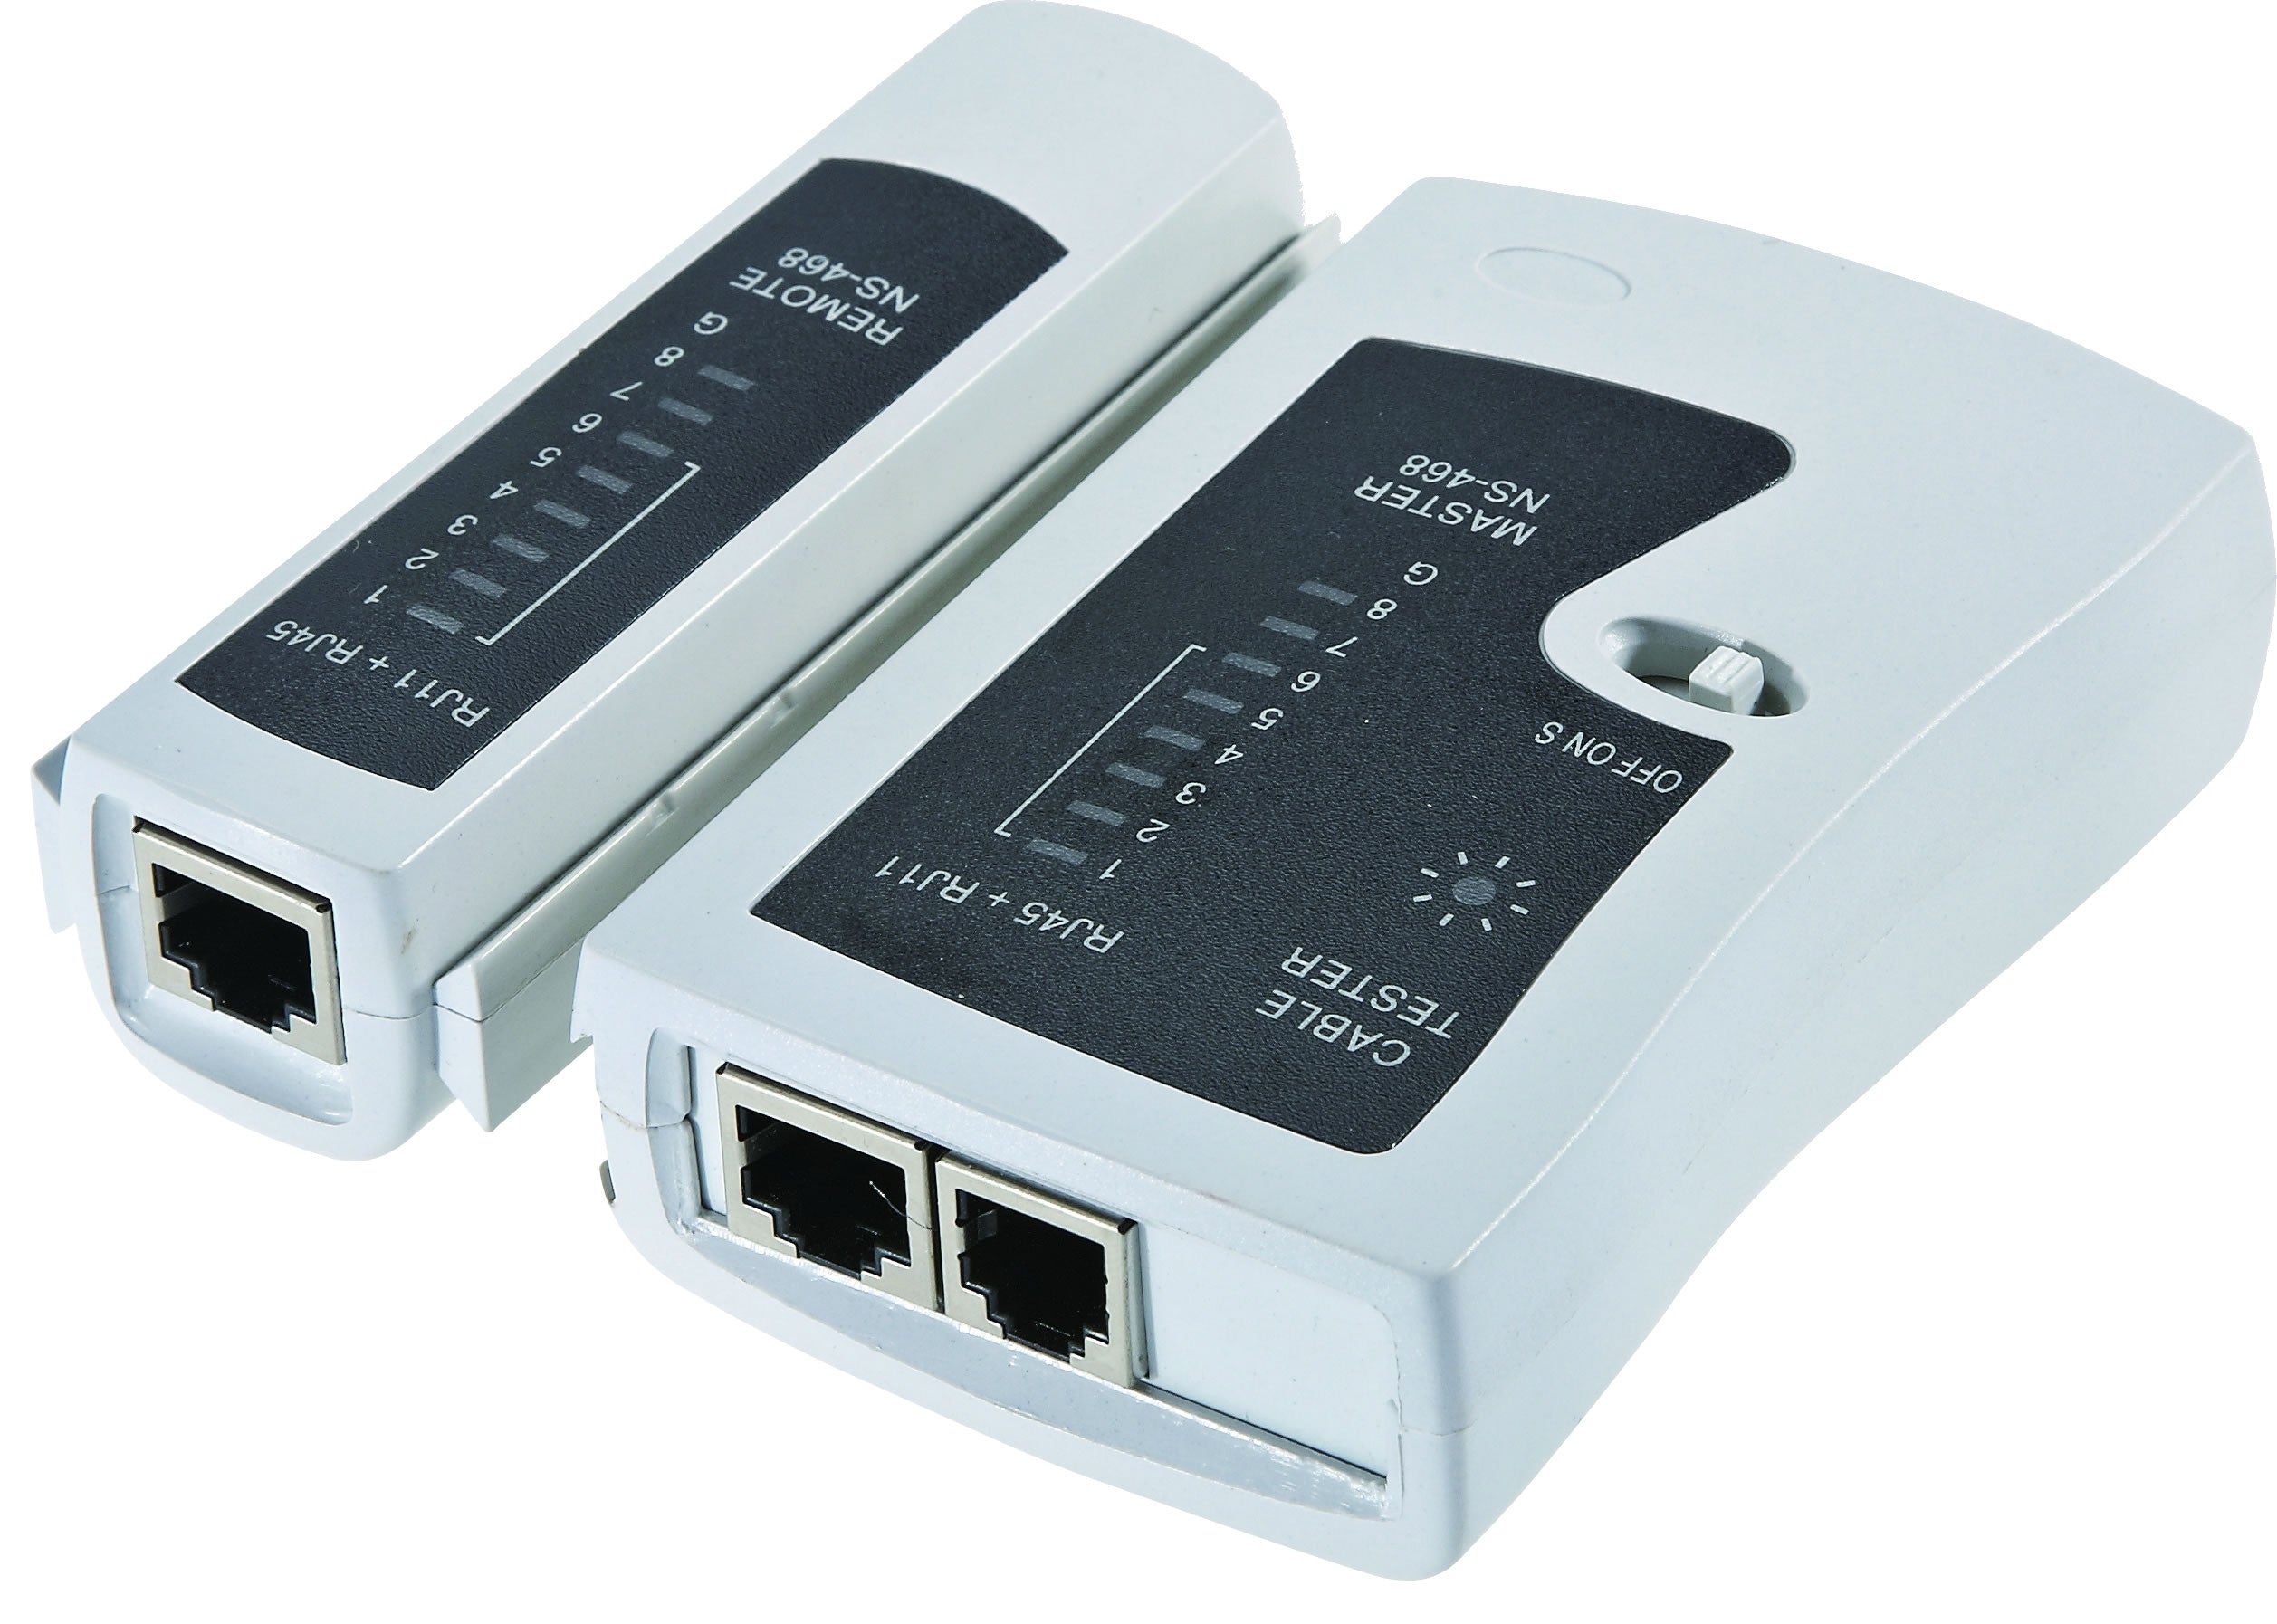 LAN Network Cable Tester for RJ45 Ethernet & RJ11/RJ12 ADSL Leads